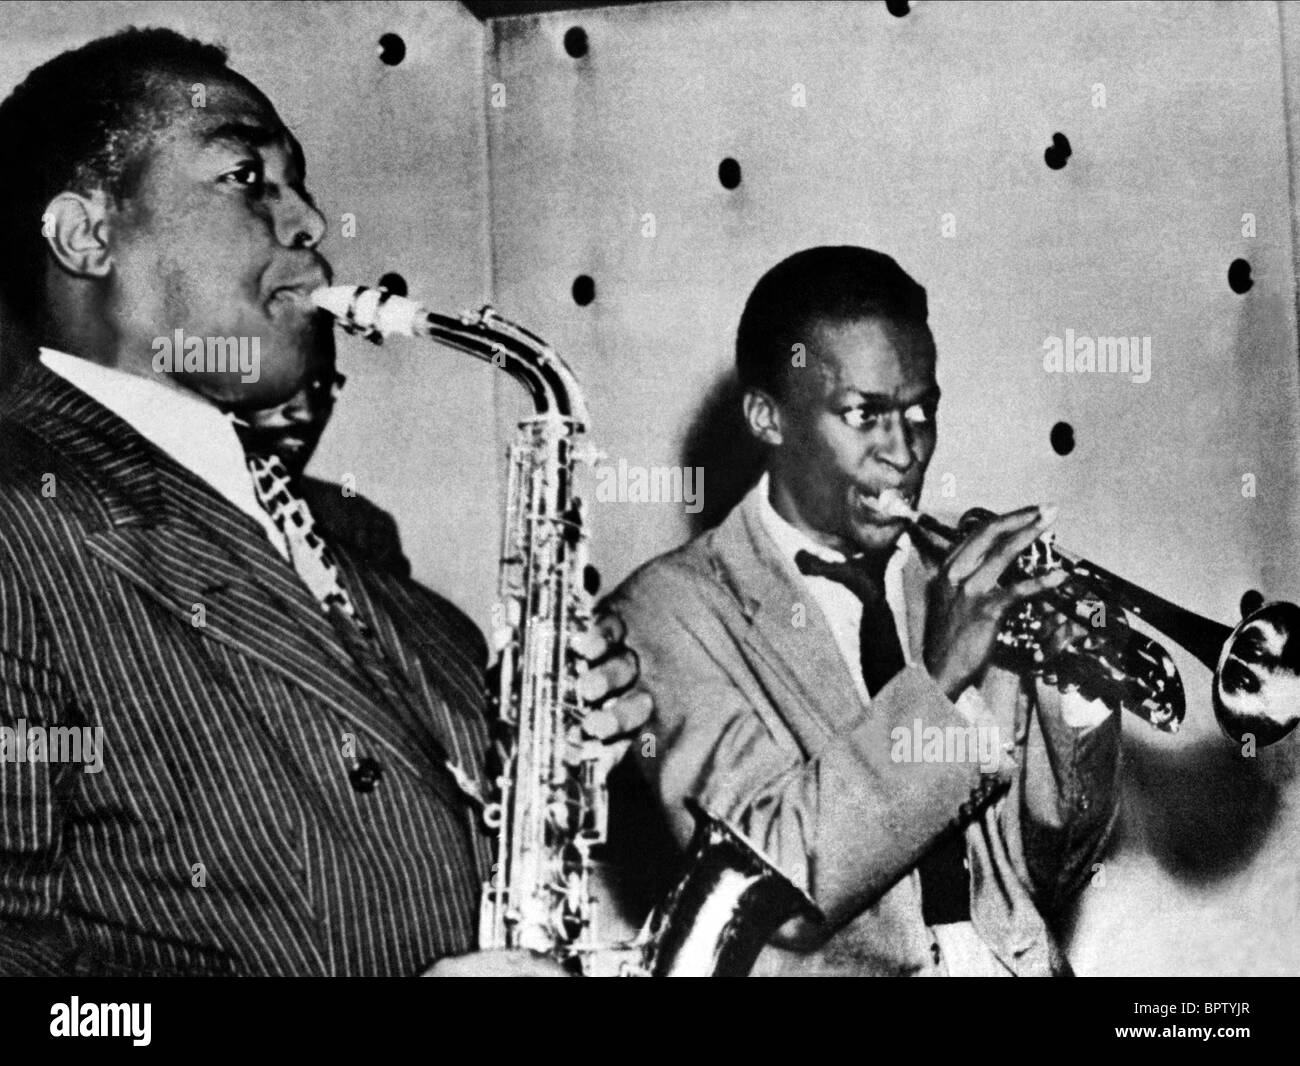 CHARLIE PARKER & MILES DAVIS JAZZ MUSICIANS (1945 Stock Photo - Alamy